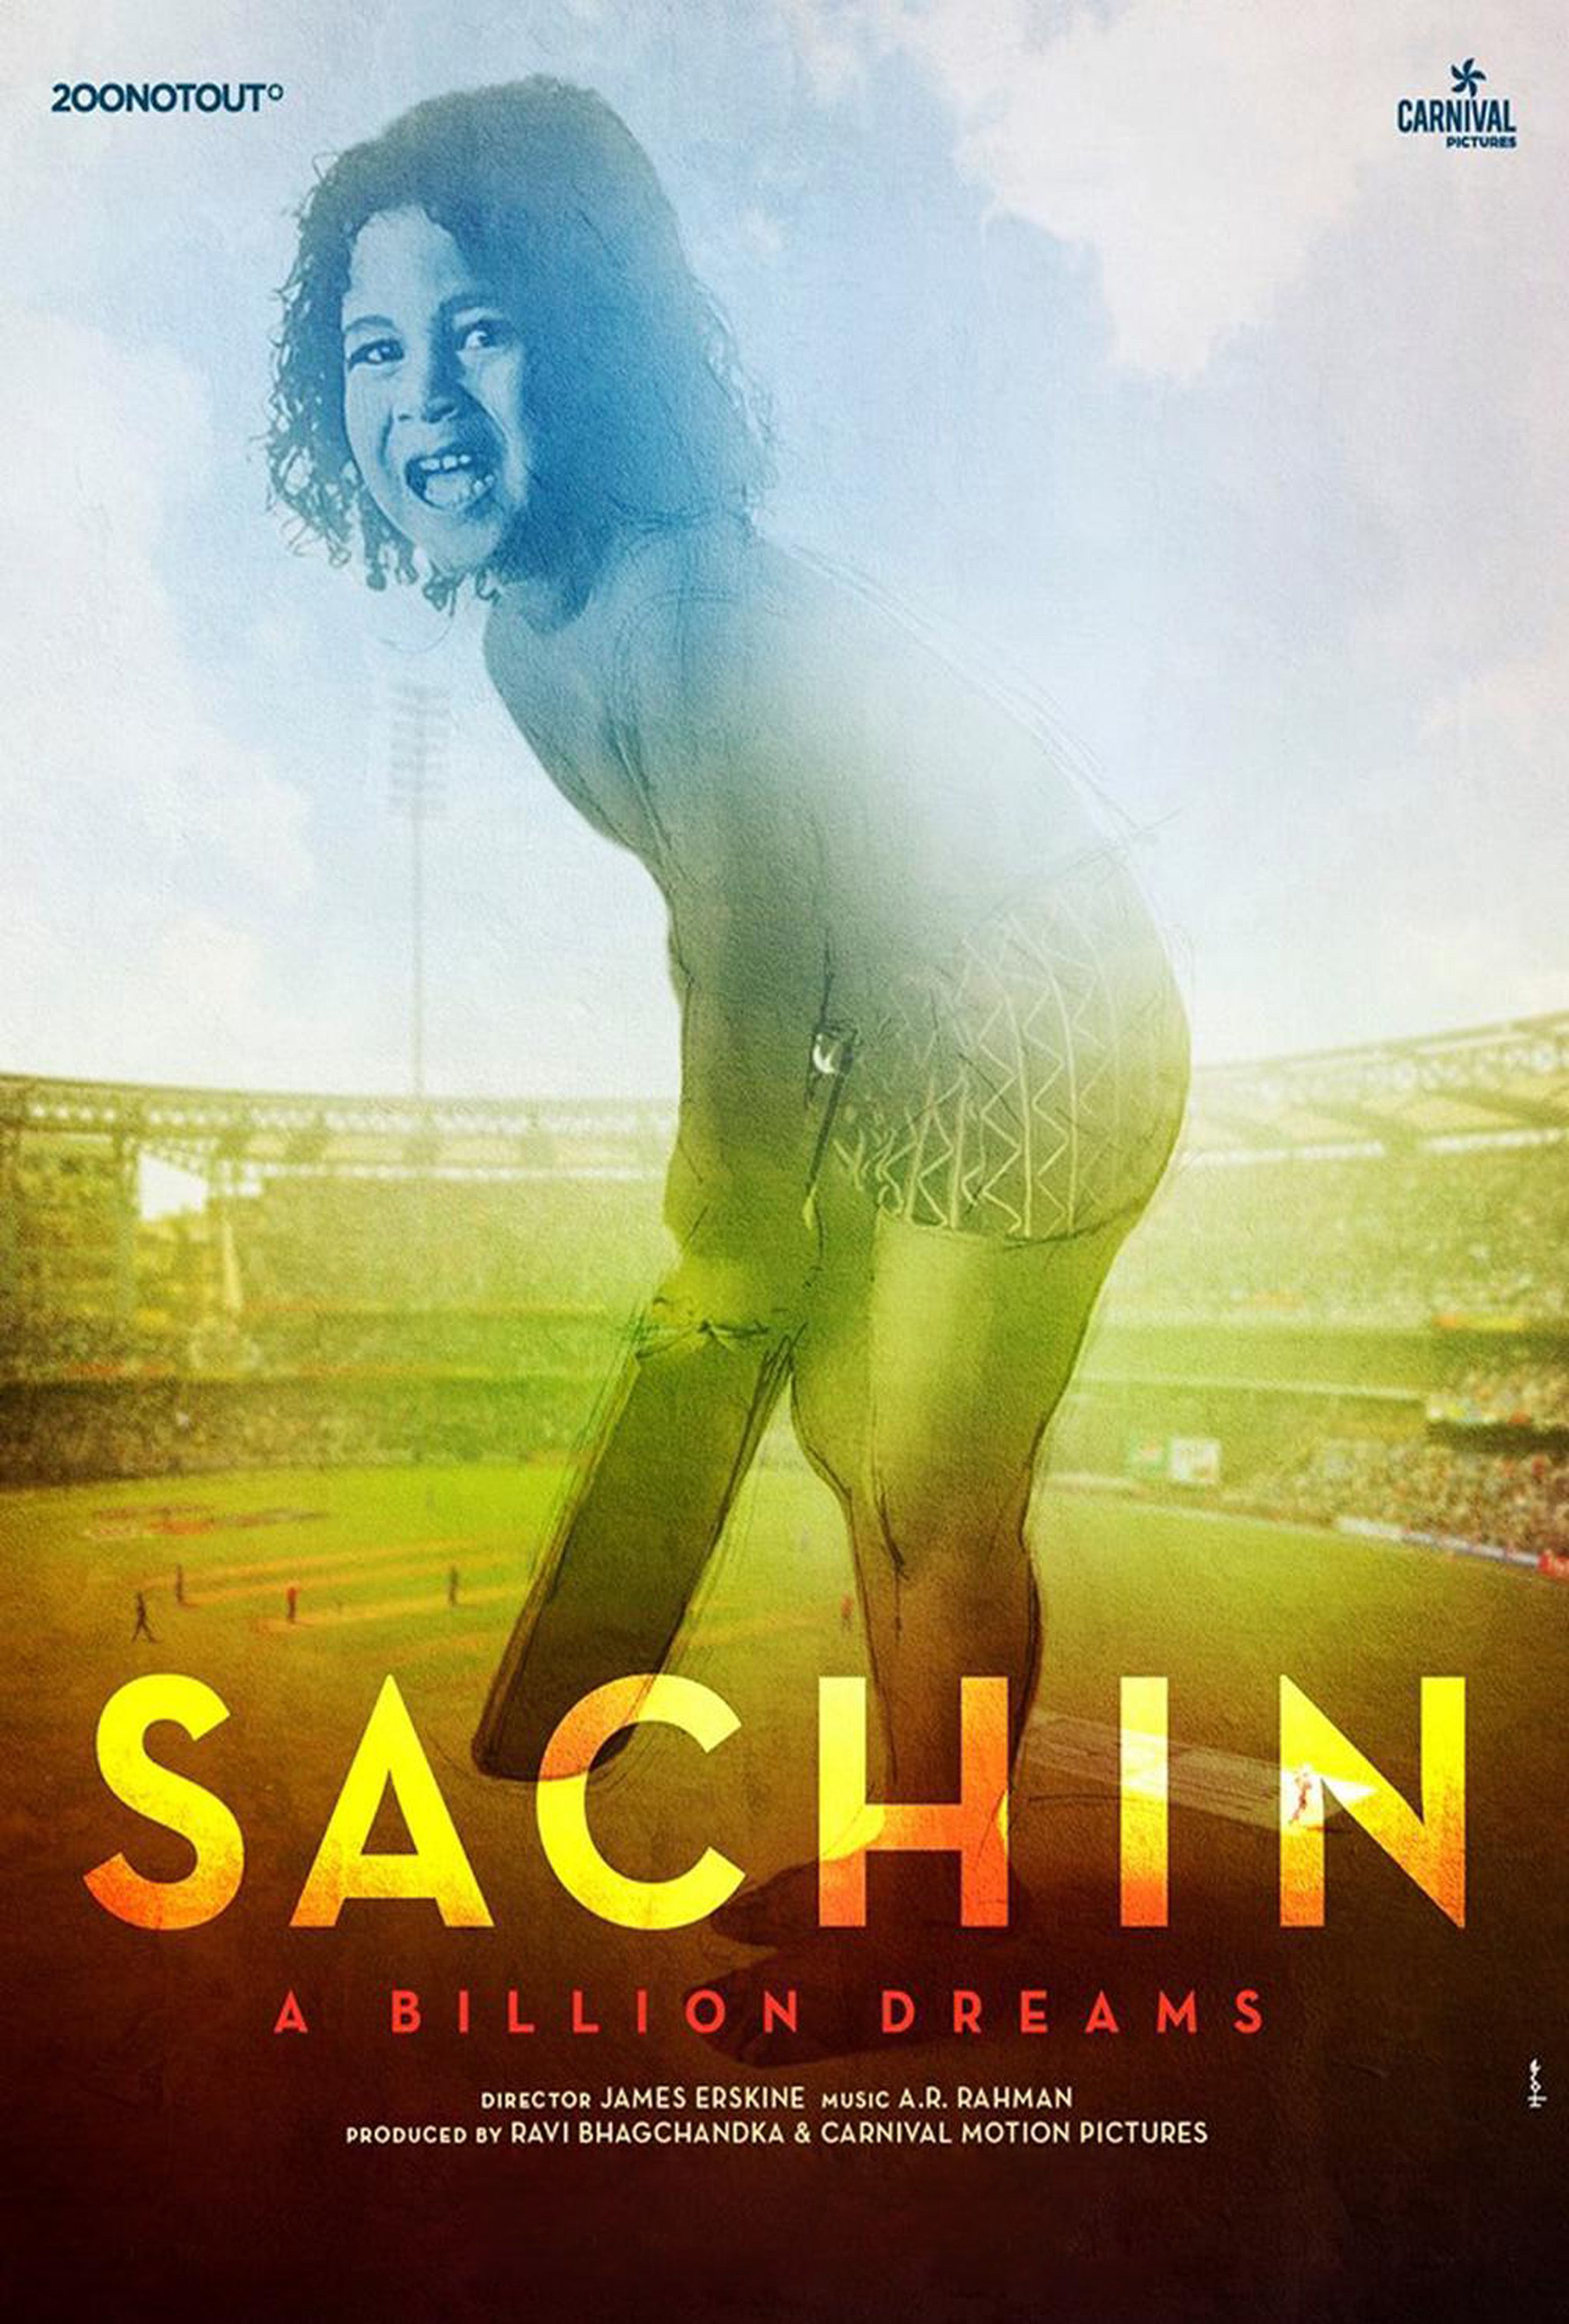 Sachin - A Billion Dreams marathi movie  hd